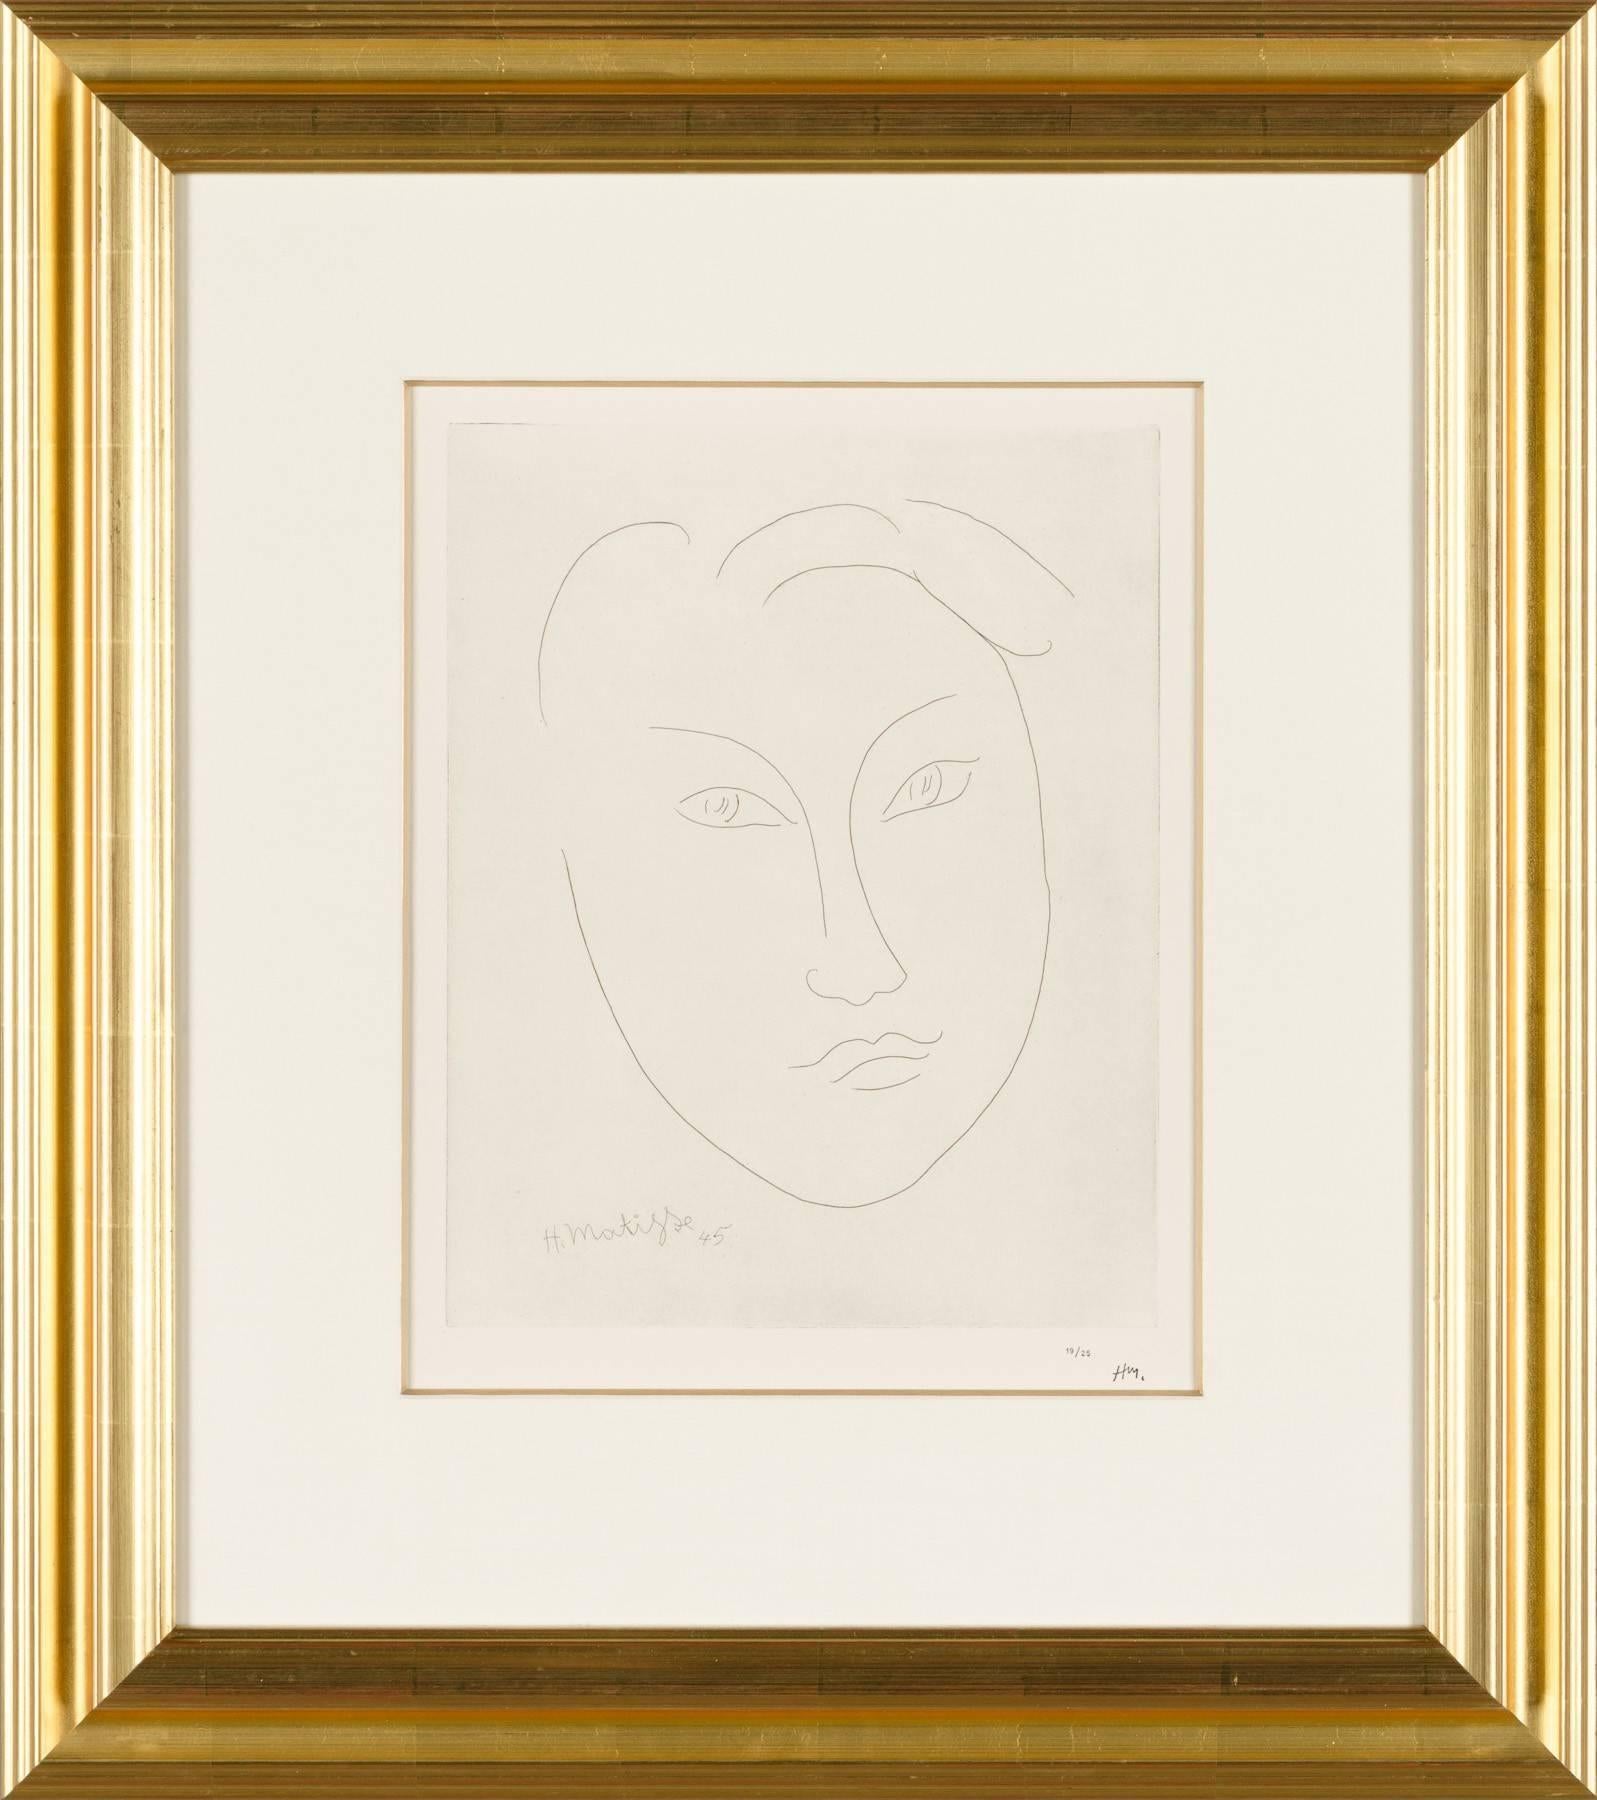 MASQUE DE JEUNE GARCON (Mask of a Young Boy) - Print by Henri Matisse